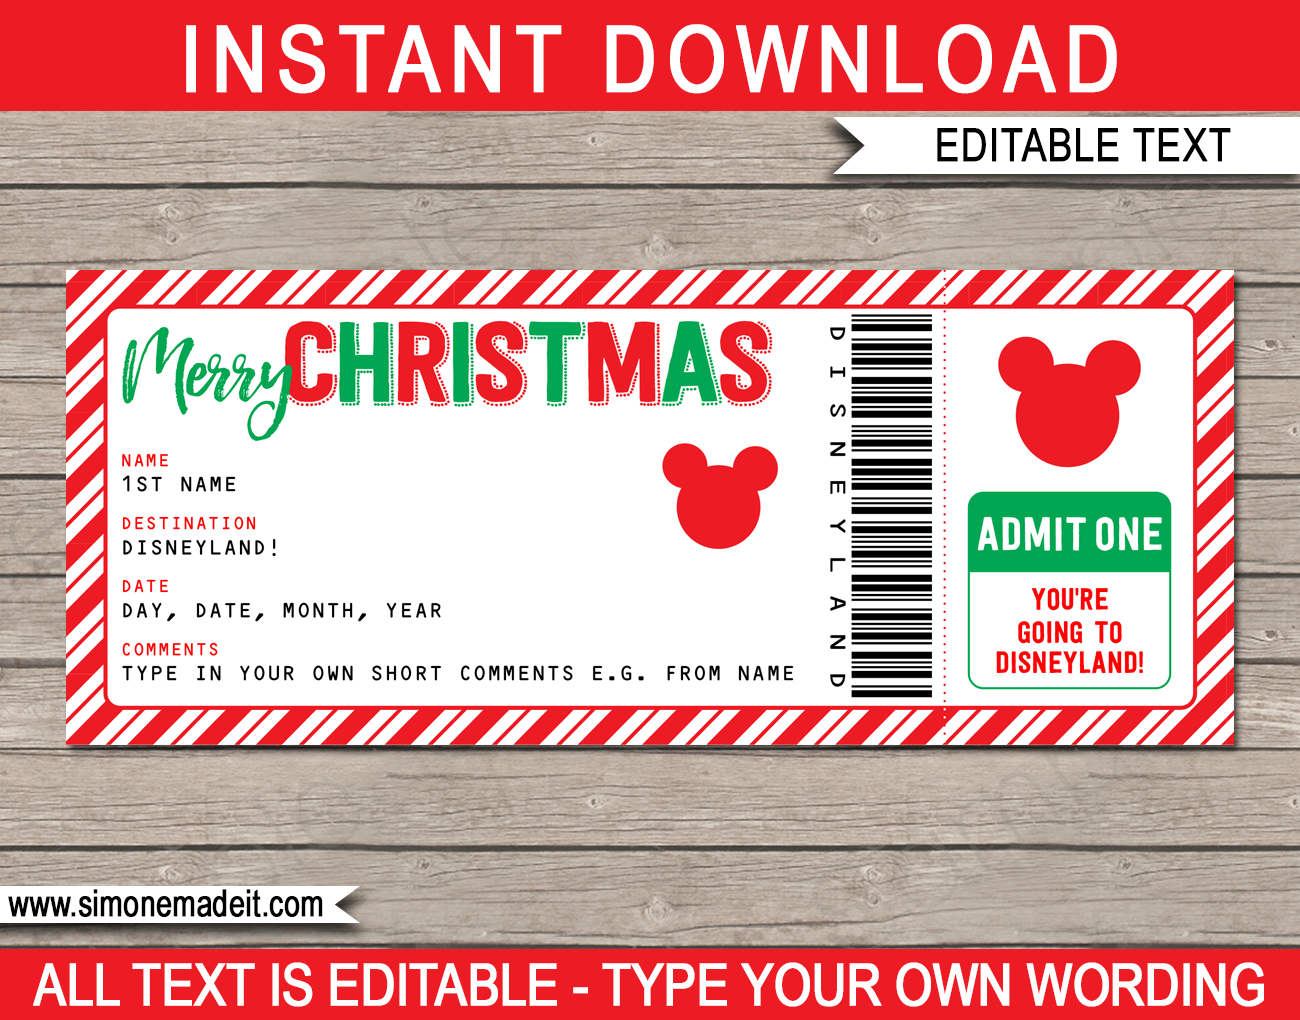 Free Printable Disneyland Ticket Template